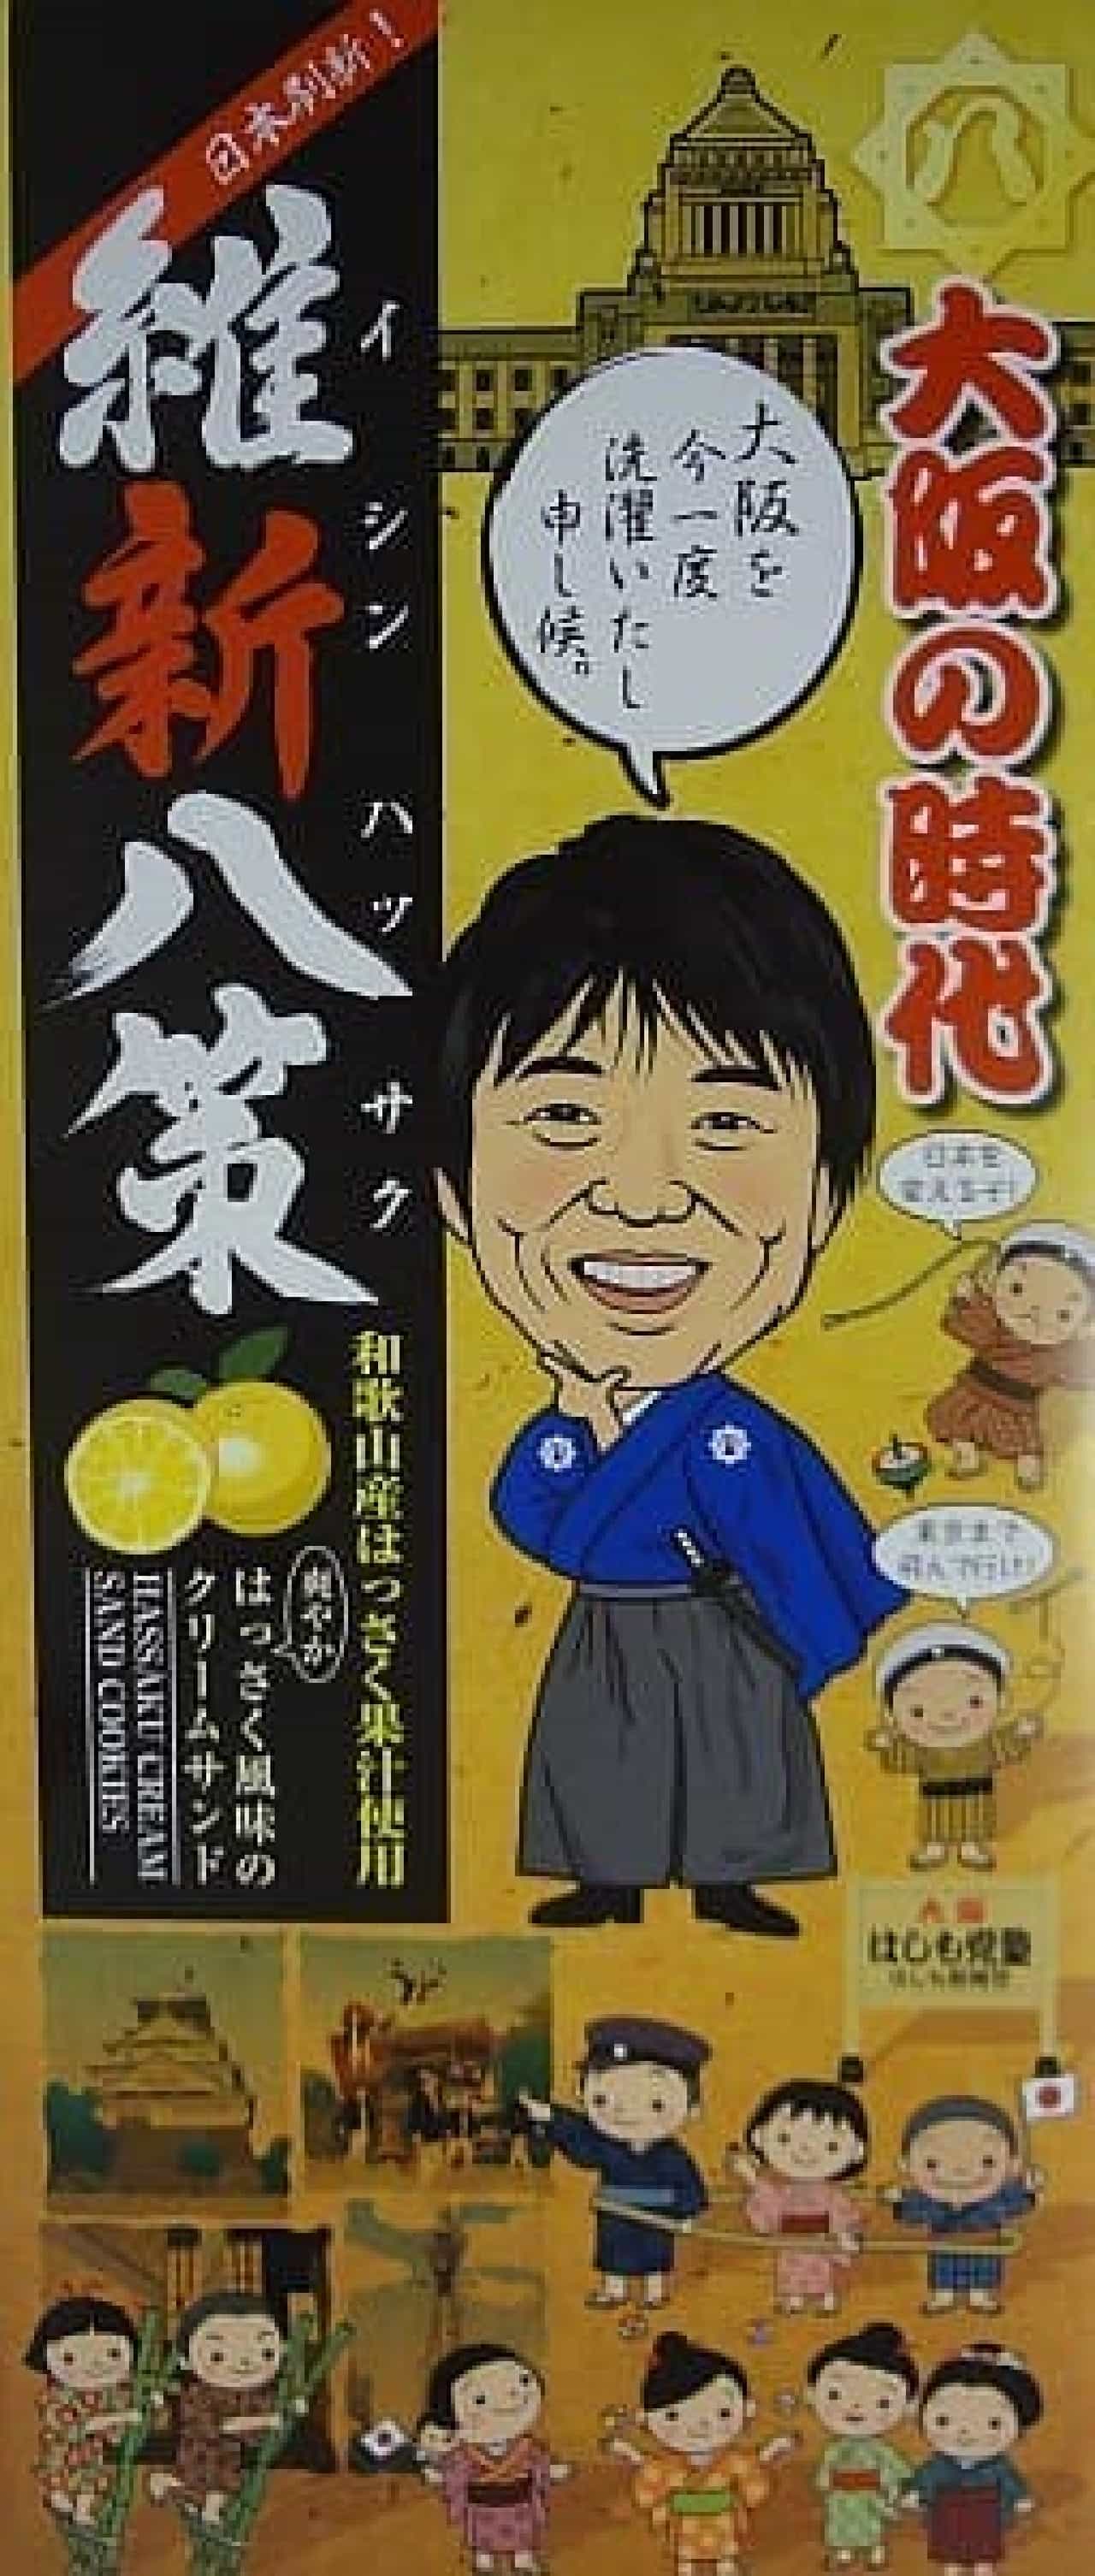 Politician goods with Toru Hashimoto as a motif "Ishin Hachisaku" using Hassaku juice